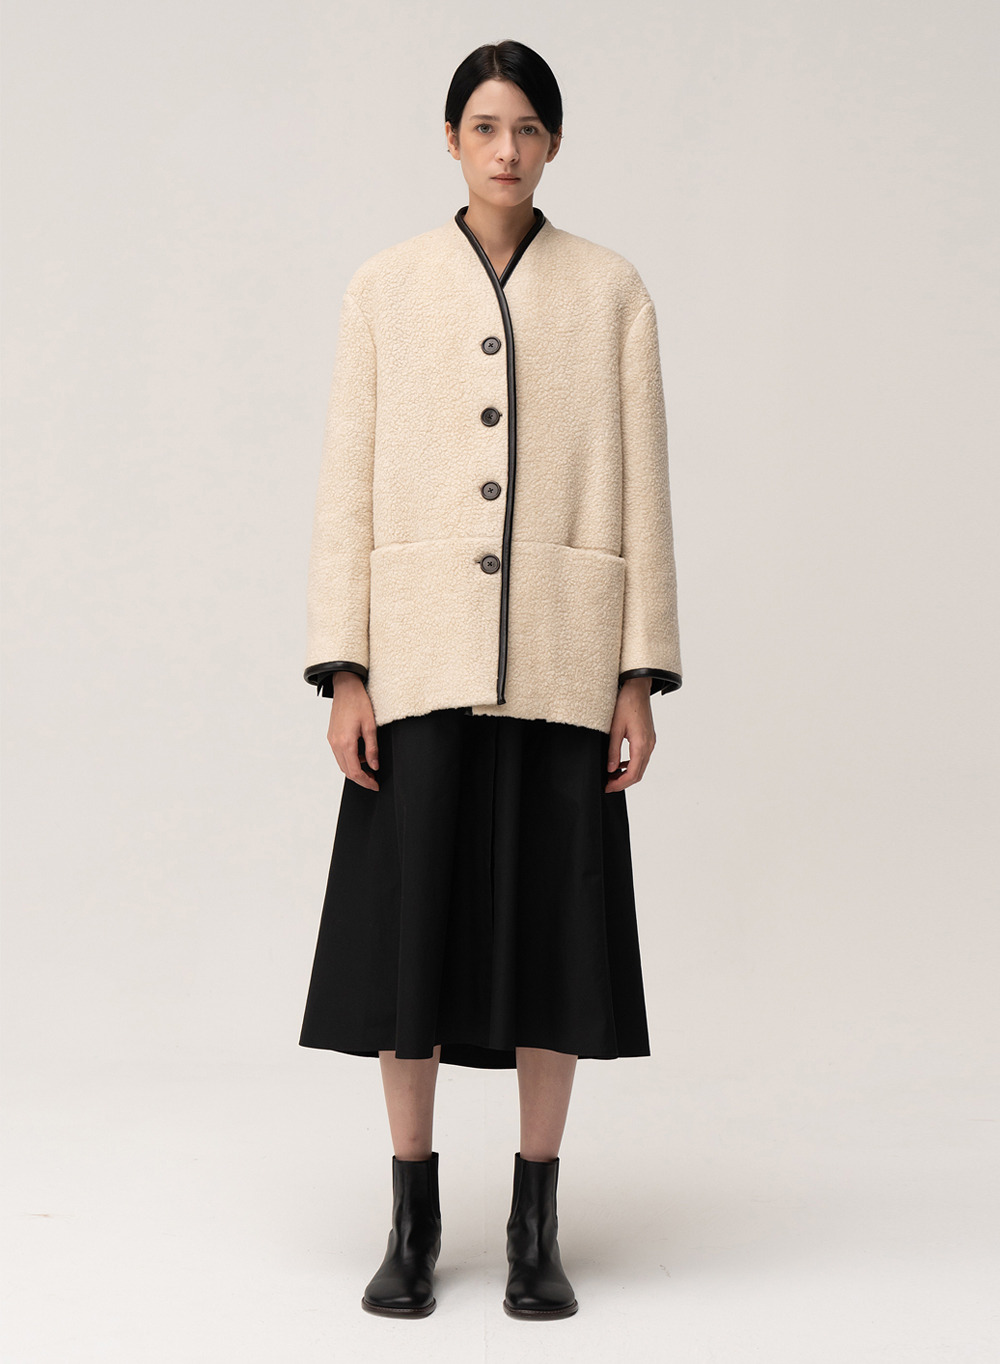 Wool Fleece Jacket From Italy (FURPILE) Ivory